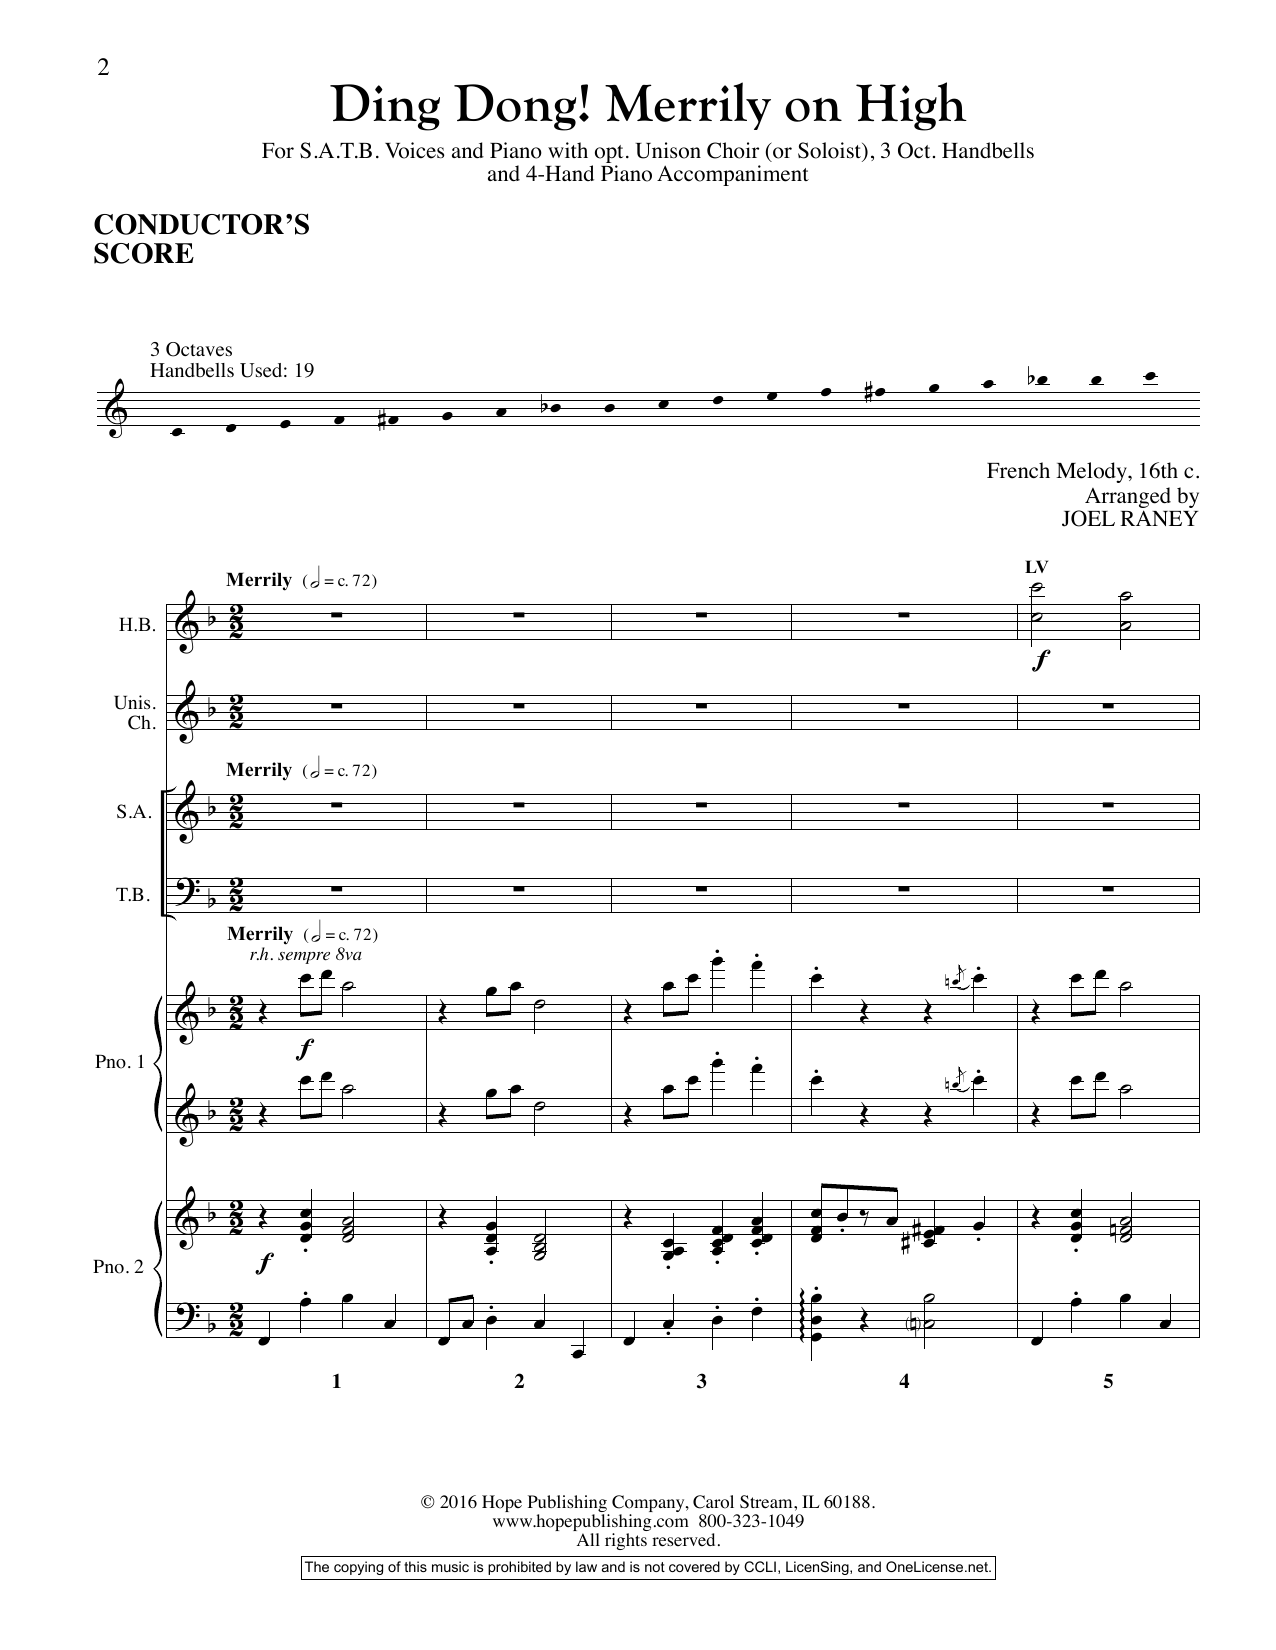 Download Joel Raney Ding Dong! Merrily On High - Full Score Sheet Music